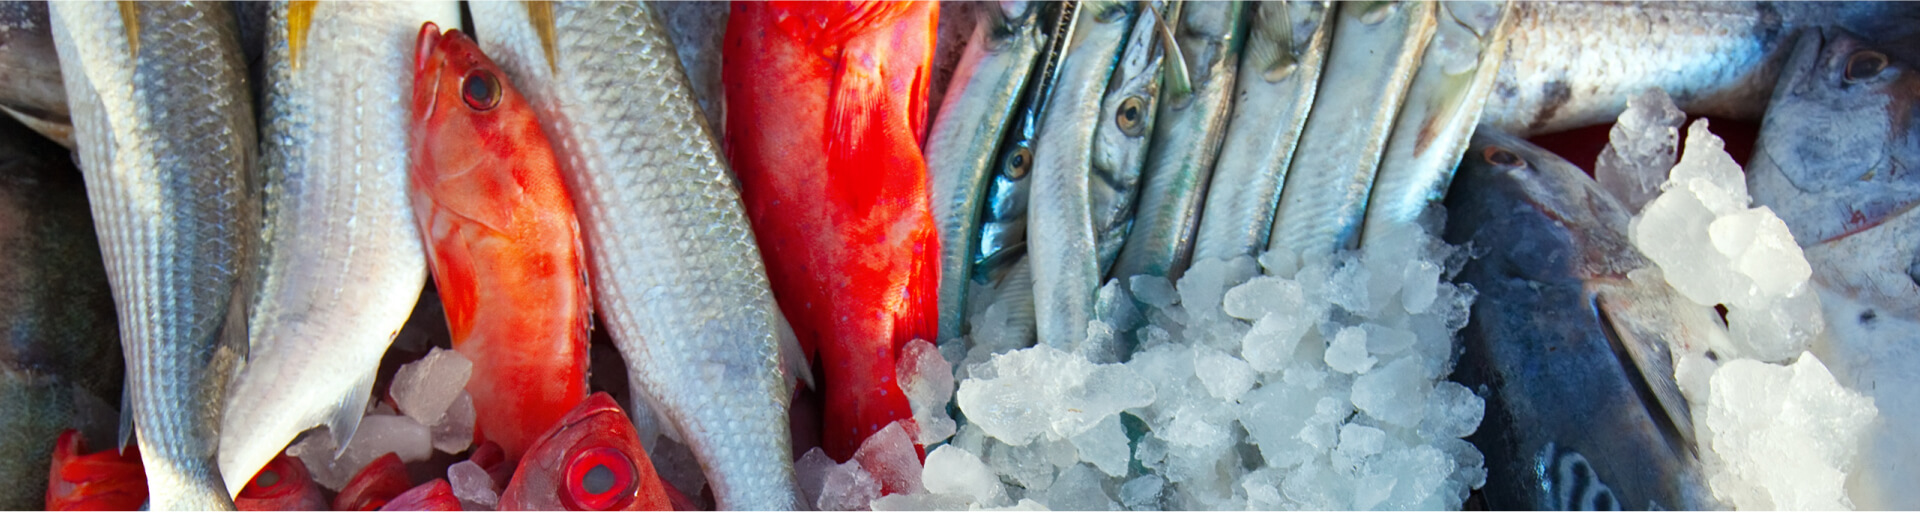 Pescateria online image